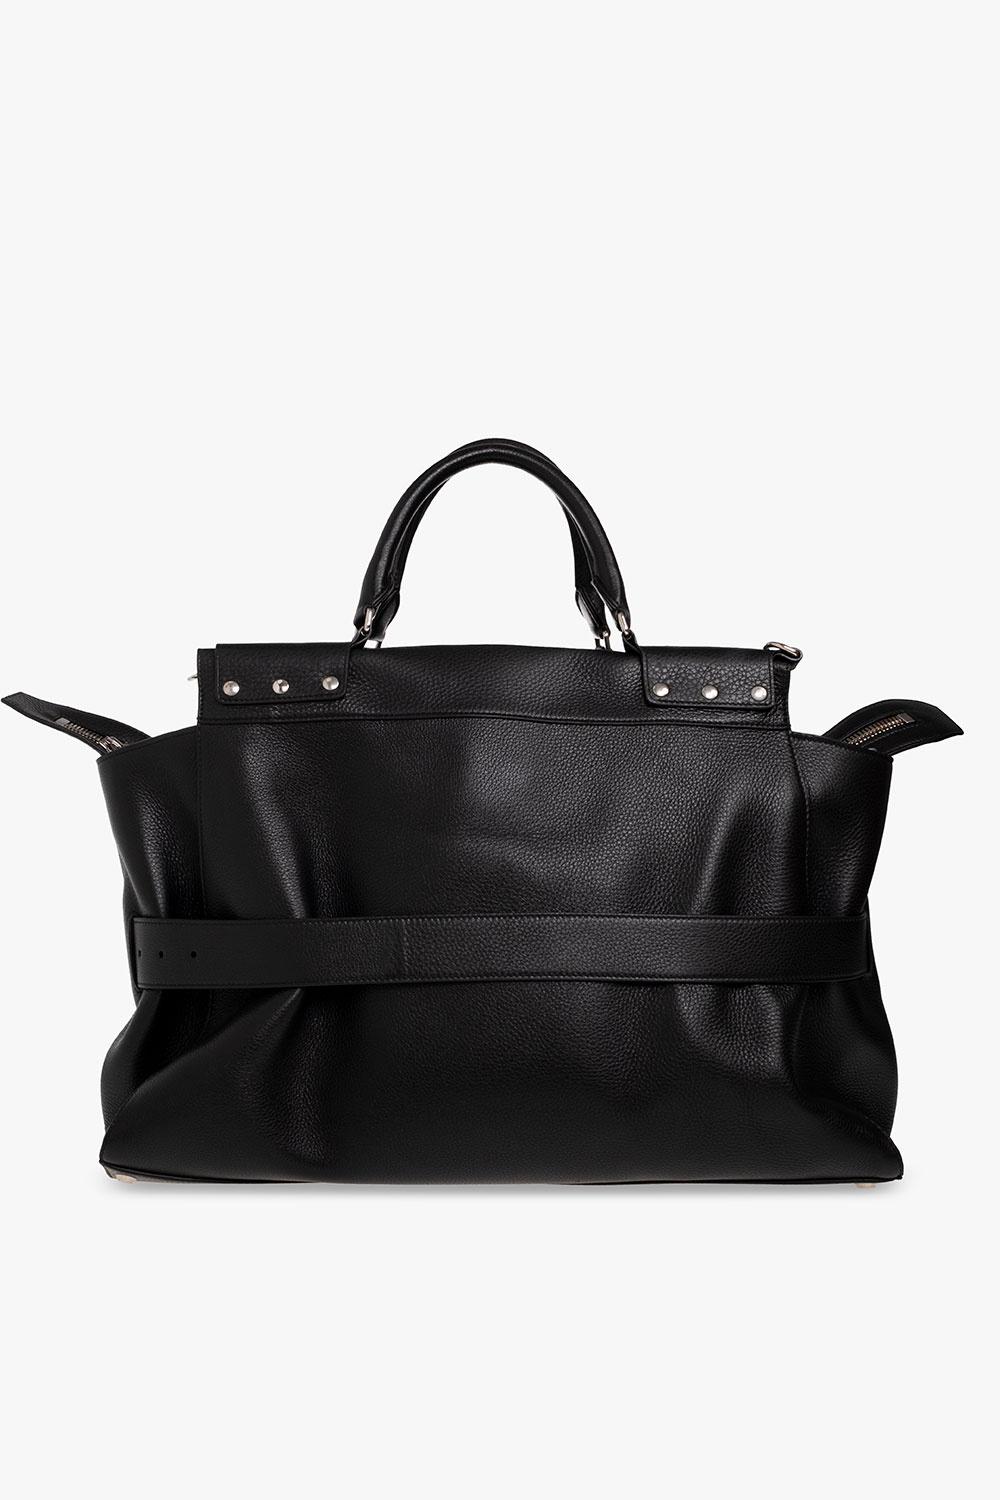 Balenciaga Trash Bag Large Pouch Black in Calfskin Leather - US